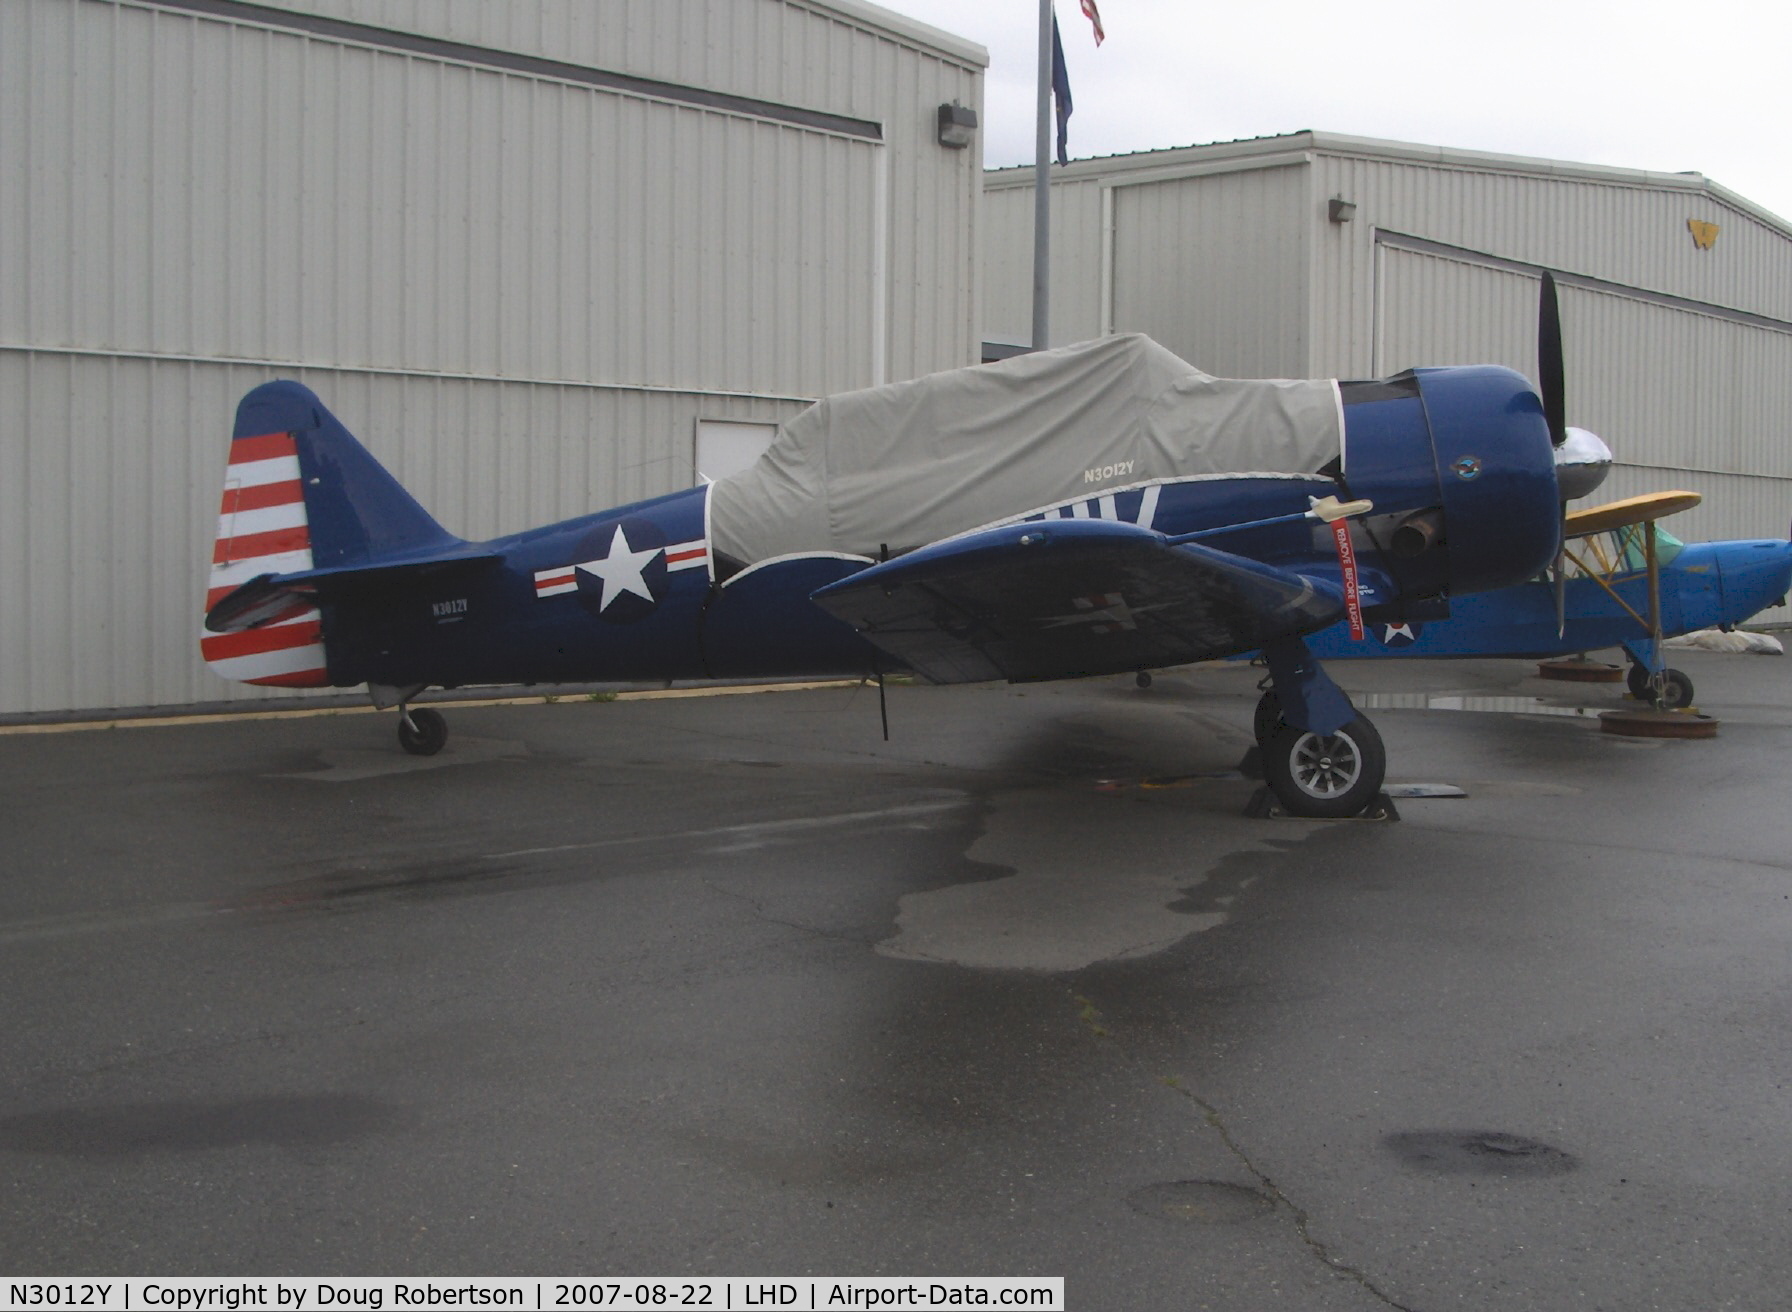 N3012Y, 1943 North American AT-6 C/N 412223, 1943 North American AT-6 TEXAN, P&W R-1340 600 Hp, at Alaska Aviation Heritage Museum